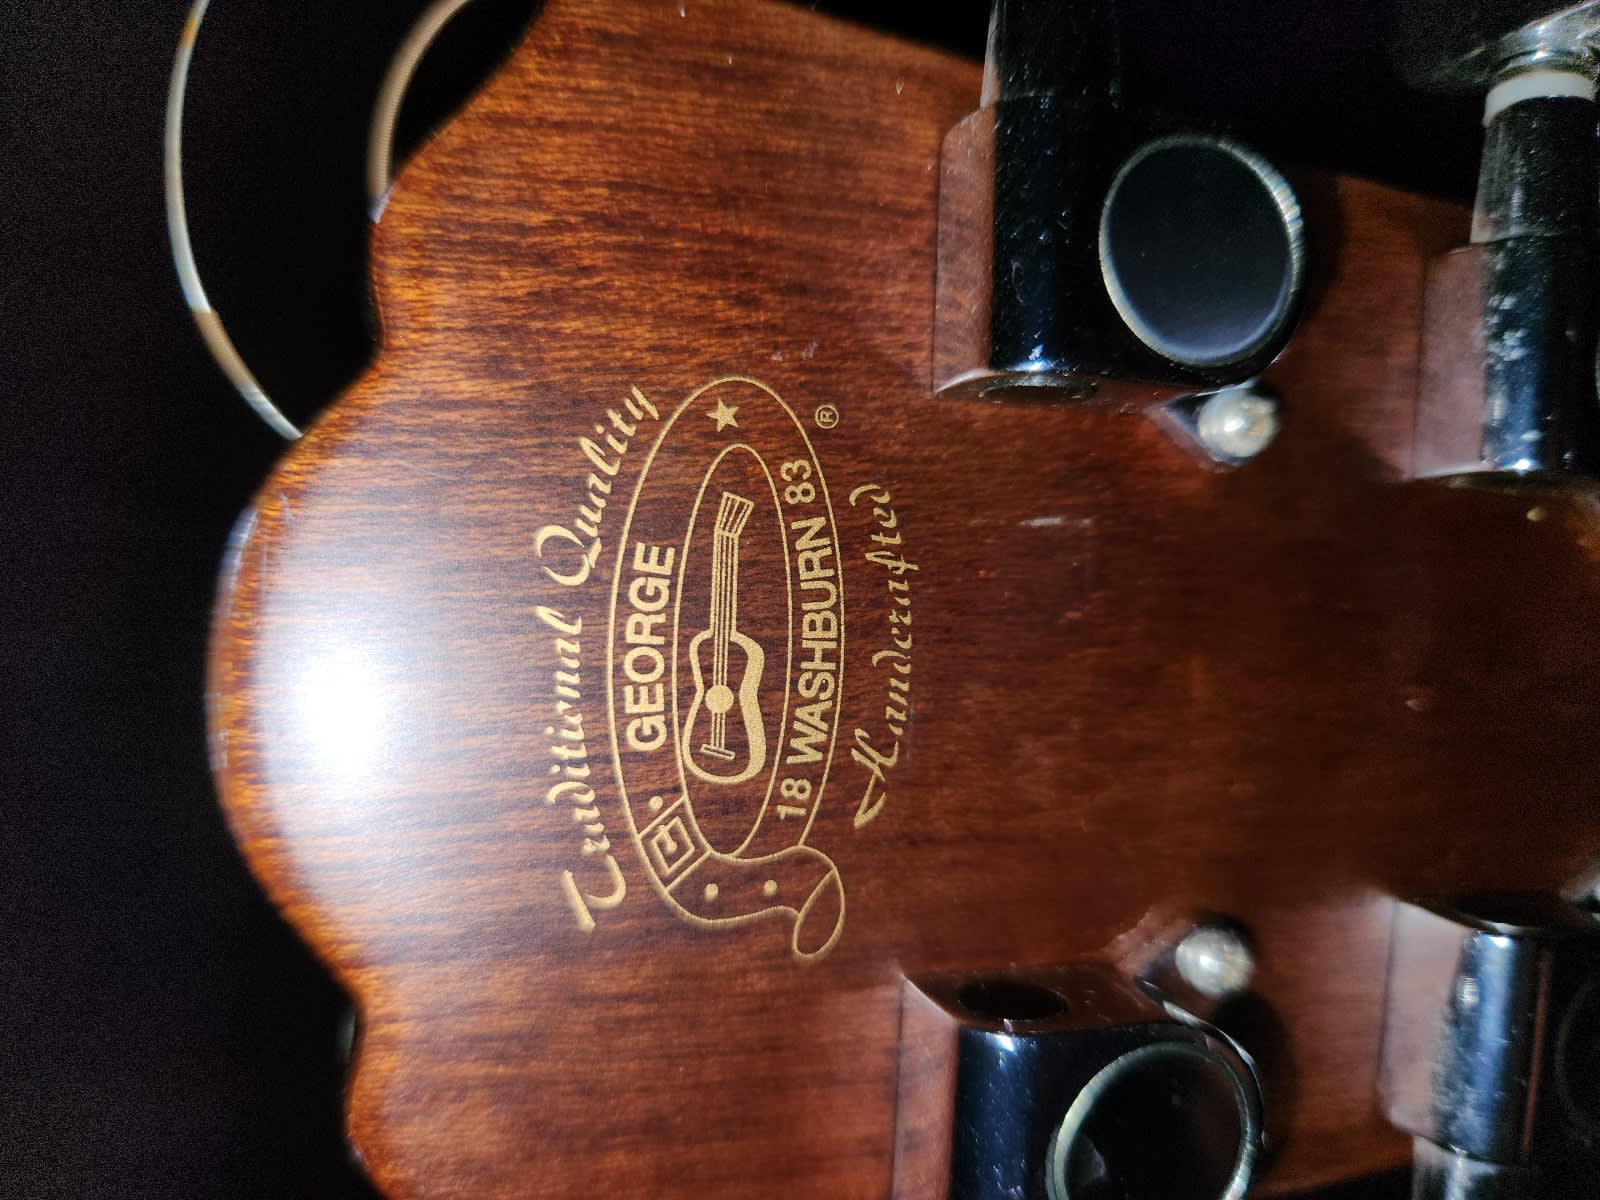 Donner Acoustic Guitar Package DAG-1CM Beginner